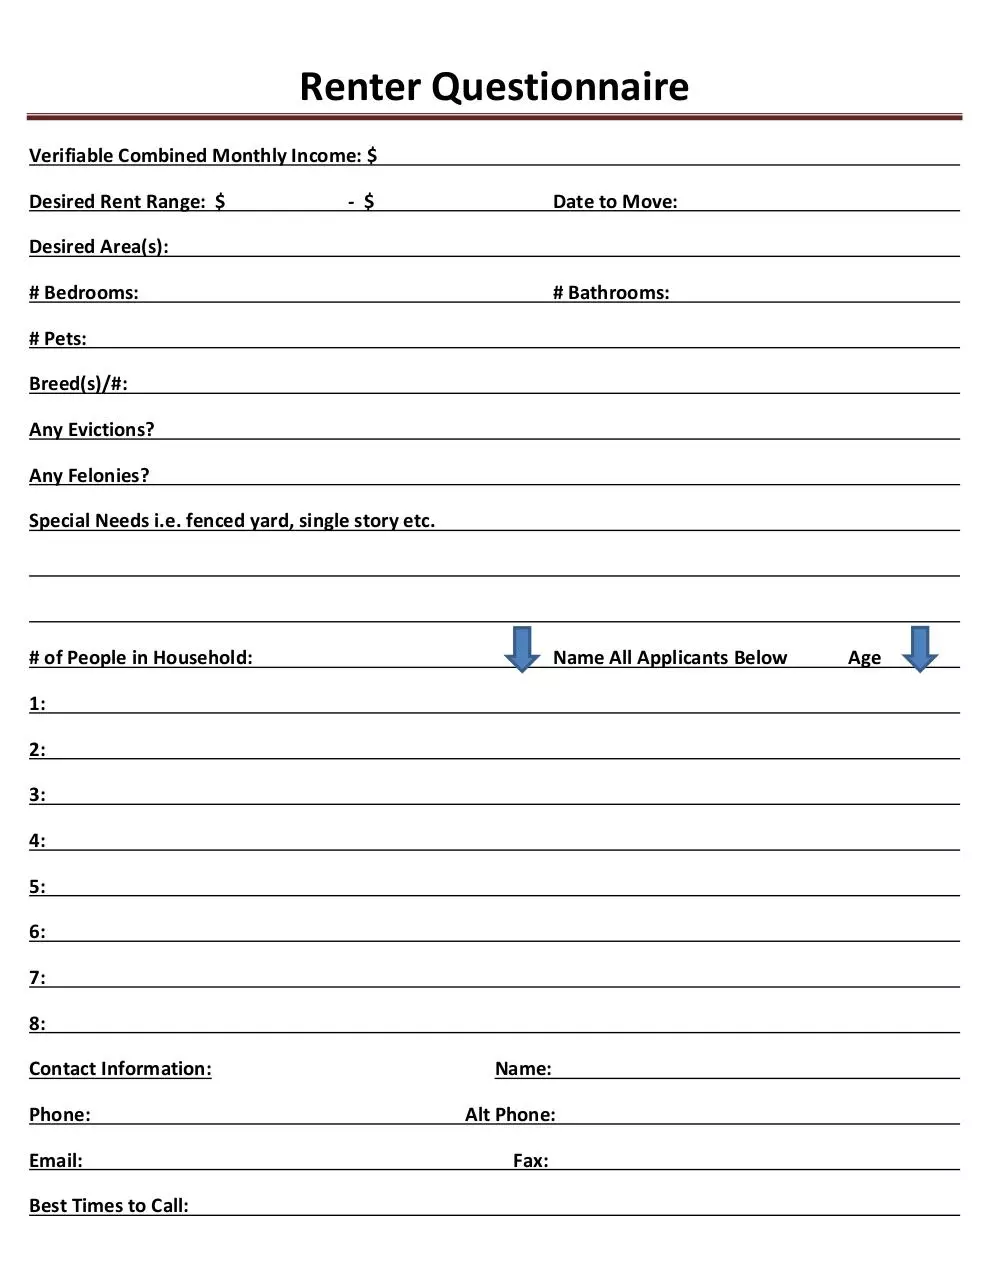 Document preview - Renter's Questionnaire.pdf - Page 1/1